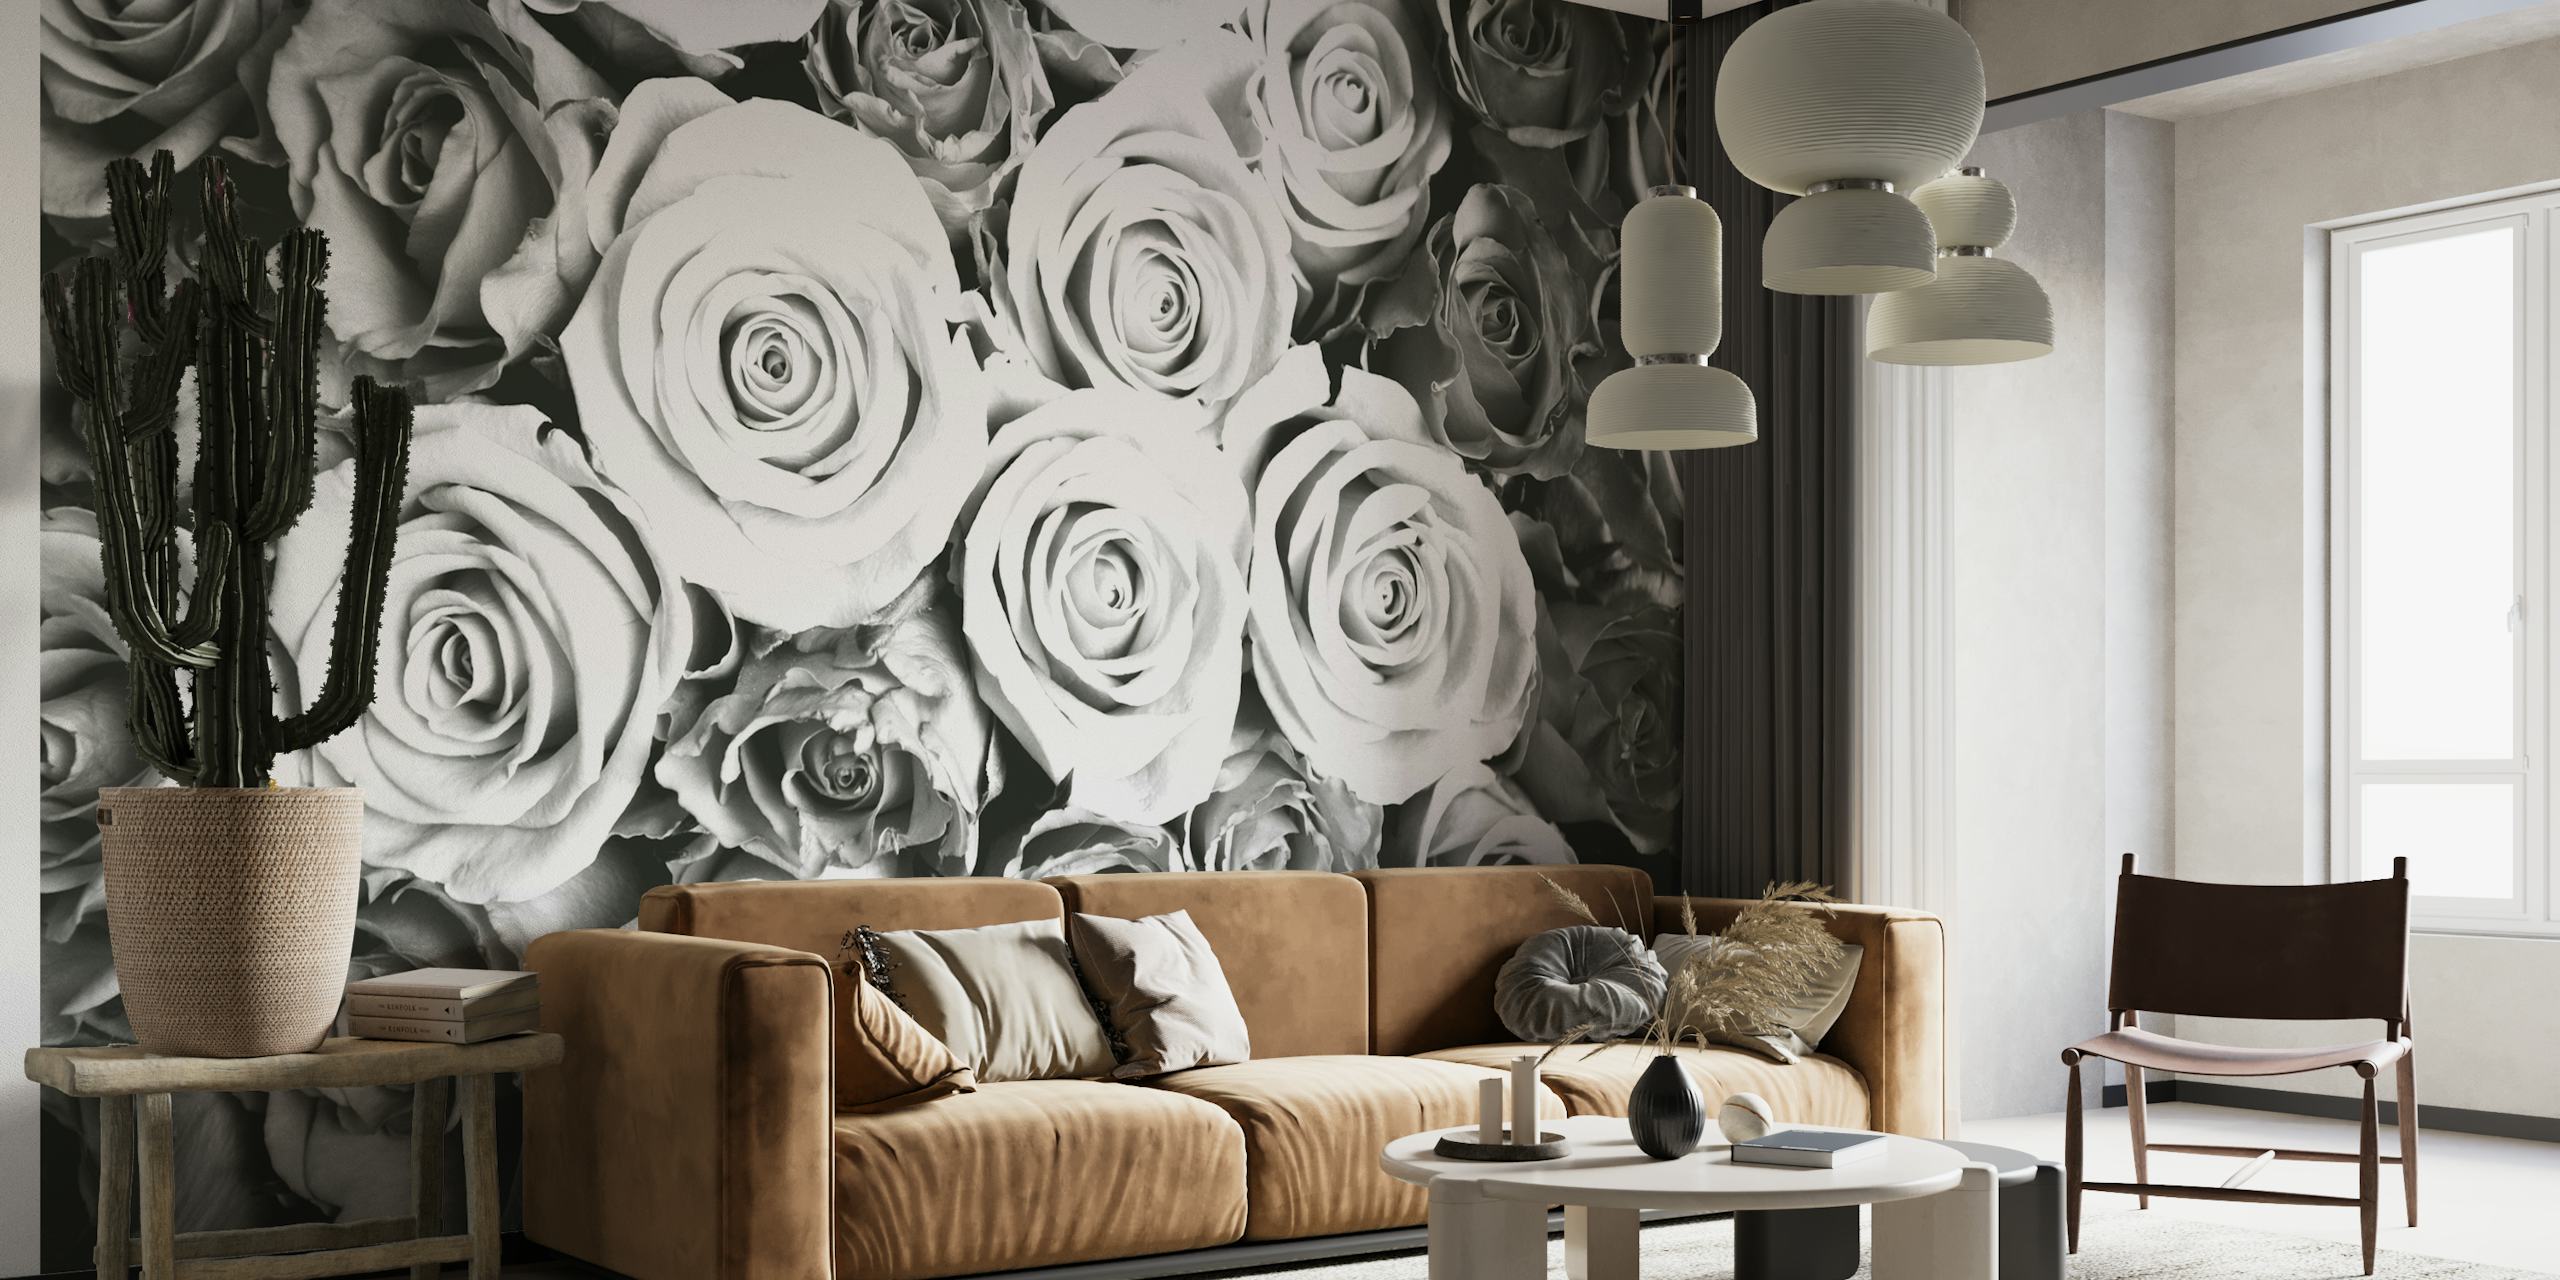 Roses black and white papel pintado